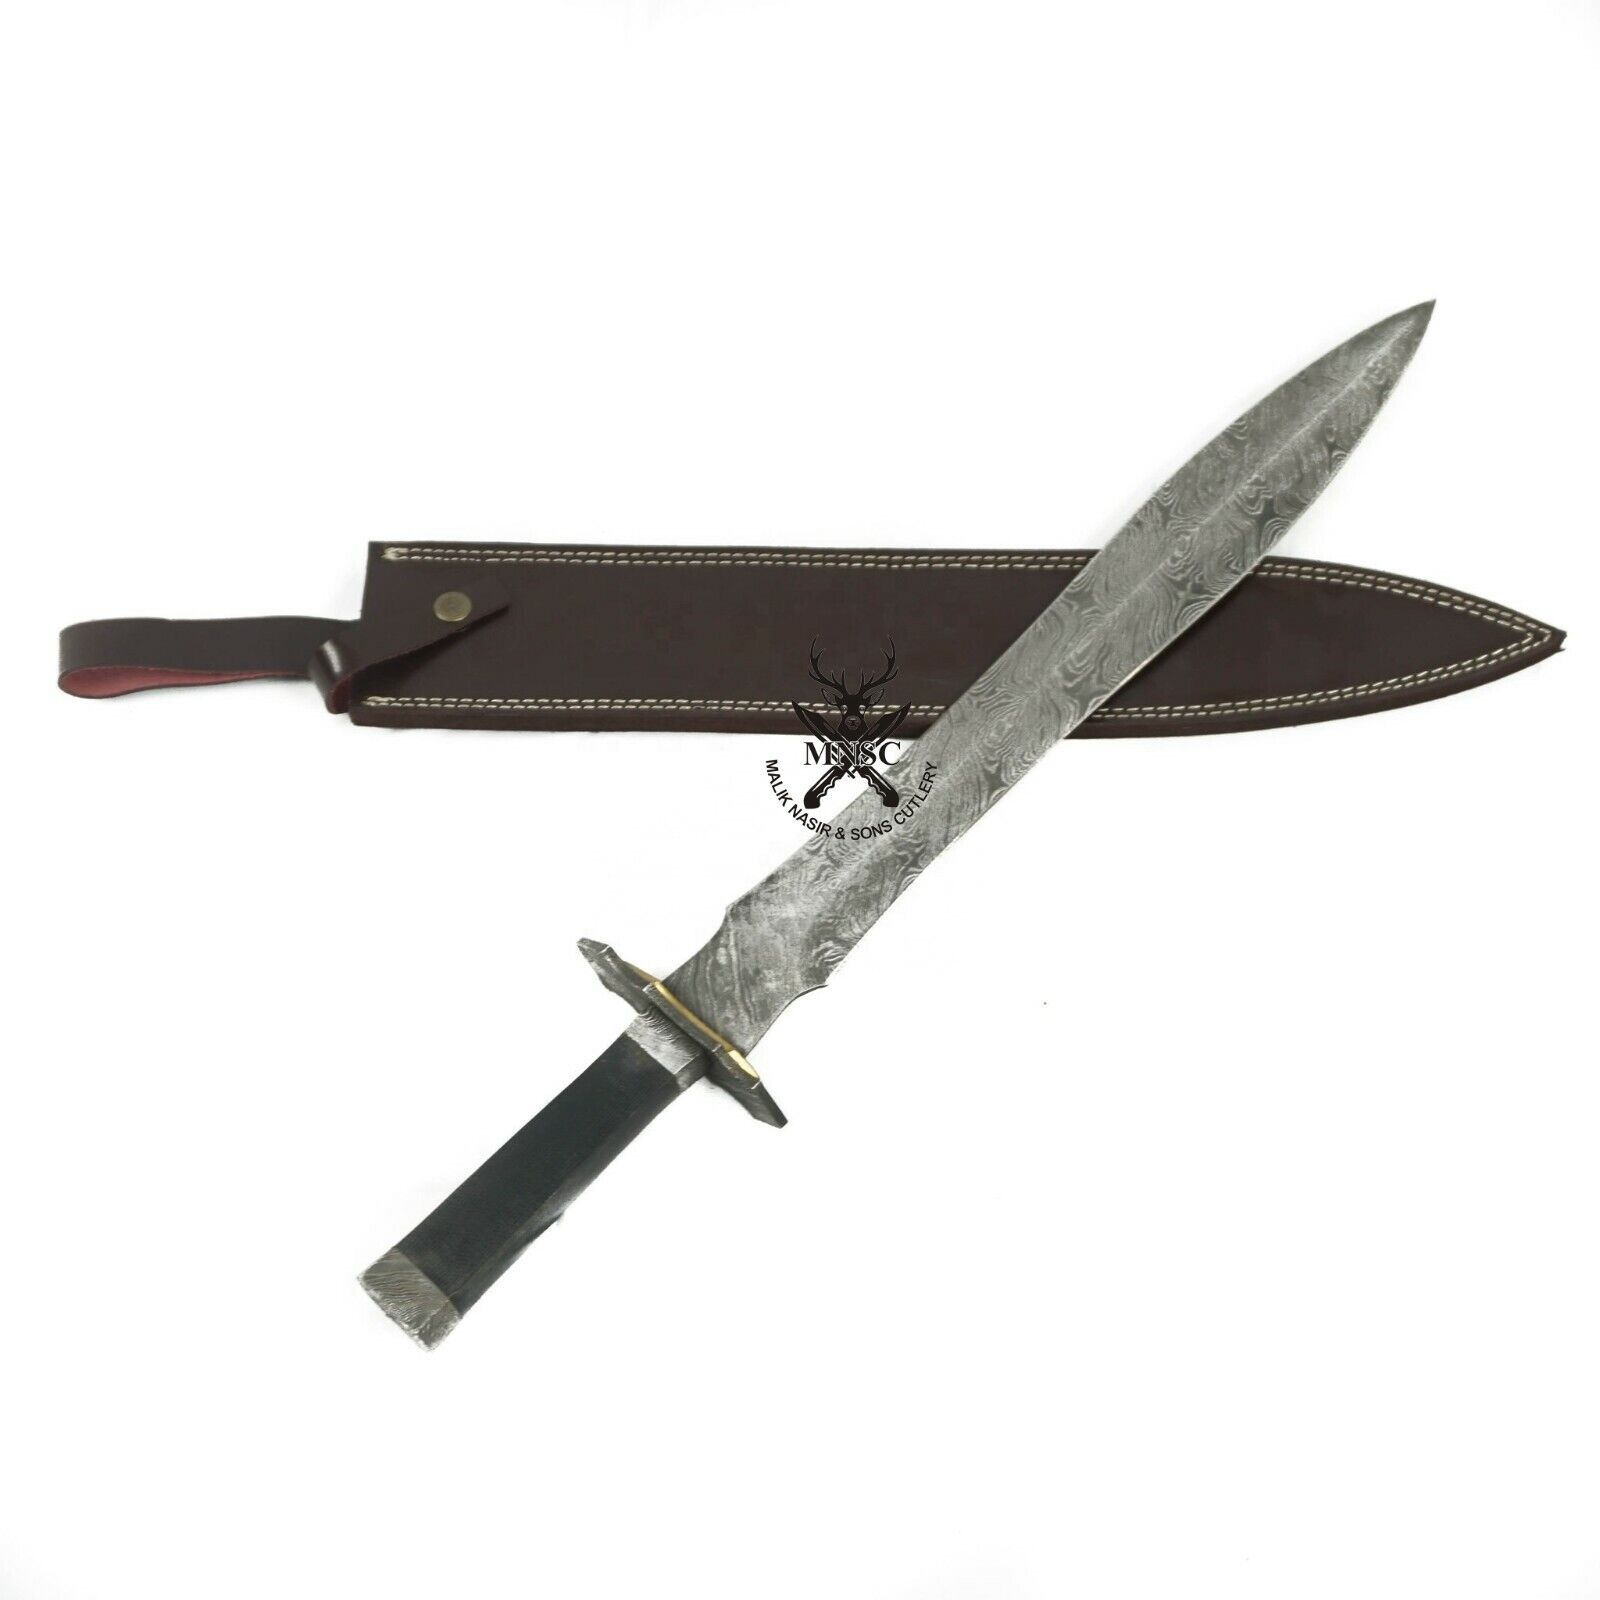 CUSTOM HANDMADE HAND FORGED DAMASCUS STEEL ROMAN GLADIOUS SWORD VIKING SWORD